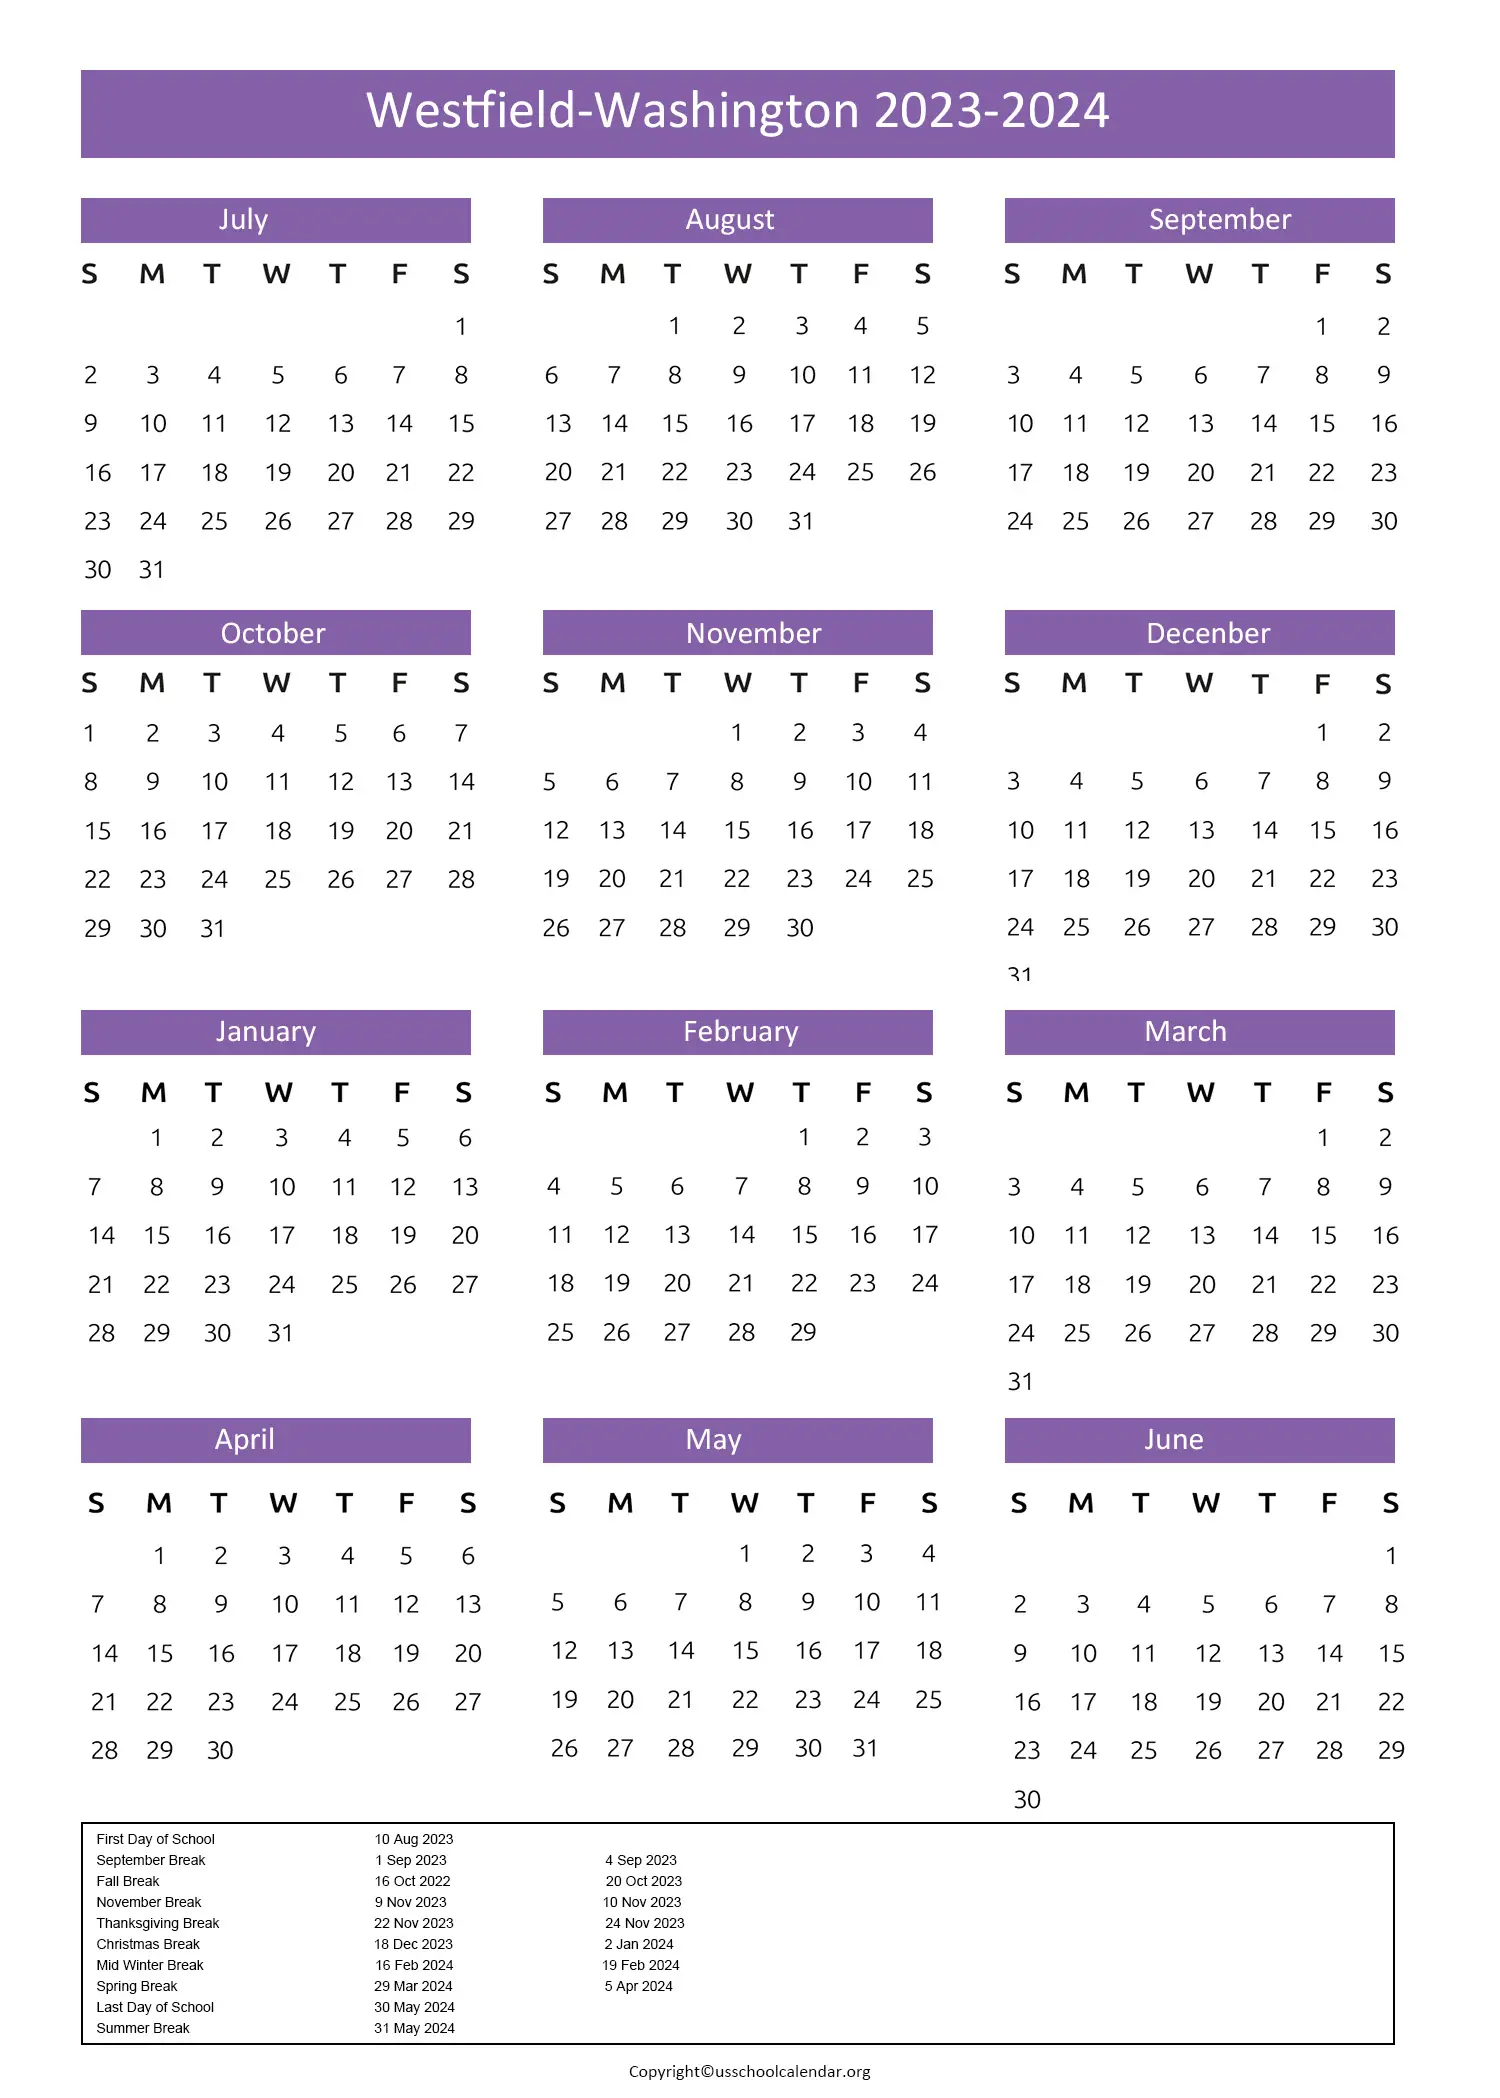 Westfield Washington Schools Calendar with Holidays 20232024